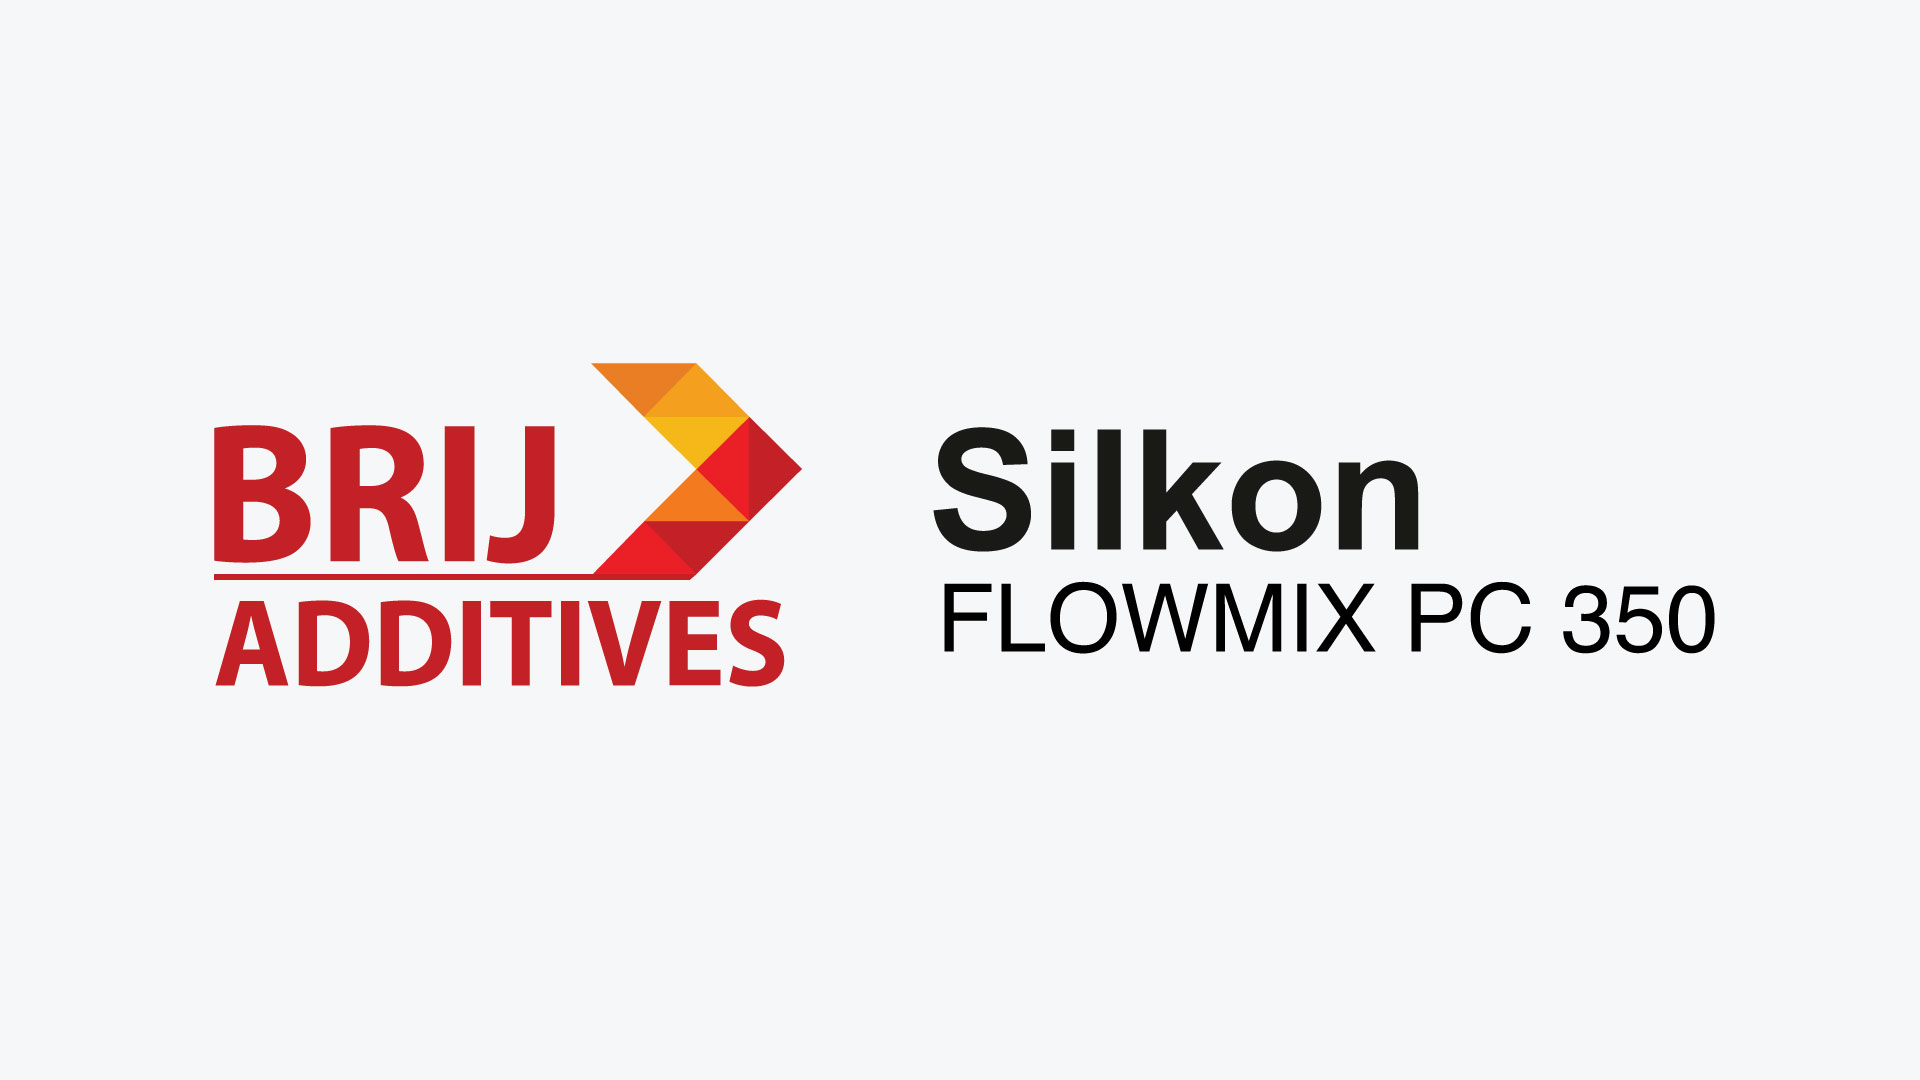 Silkon Flowmix PC 350